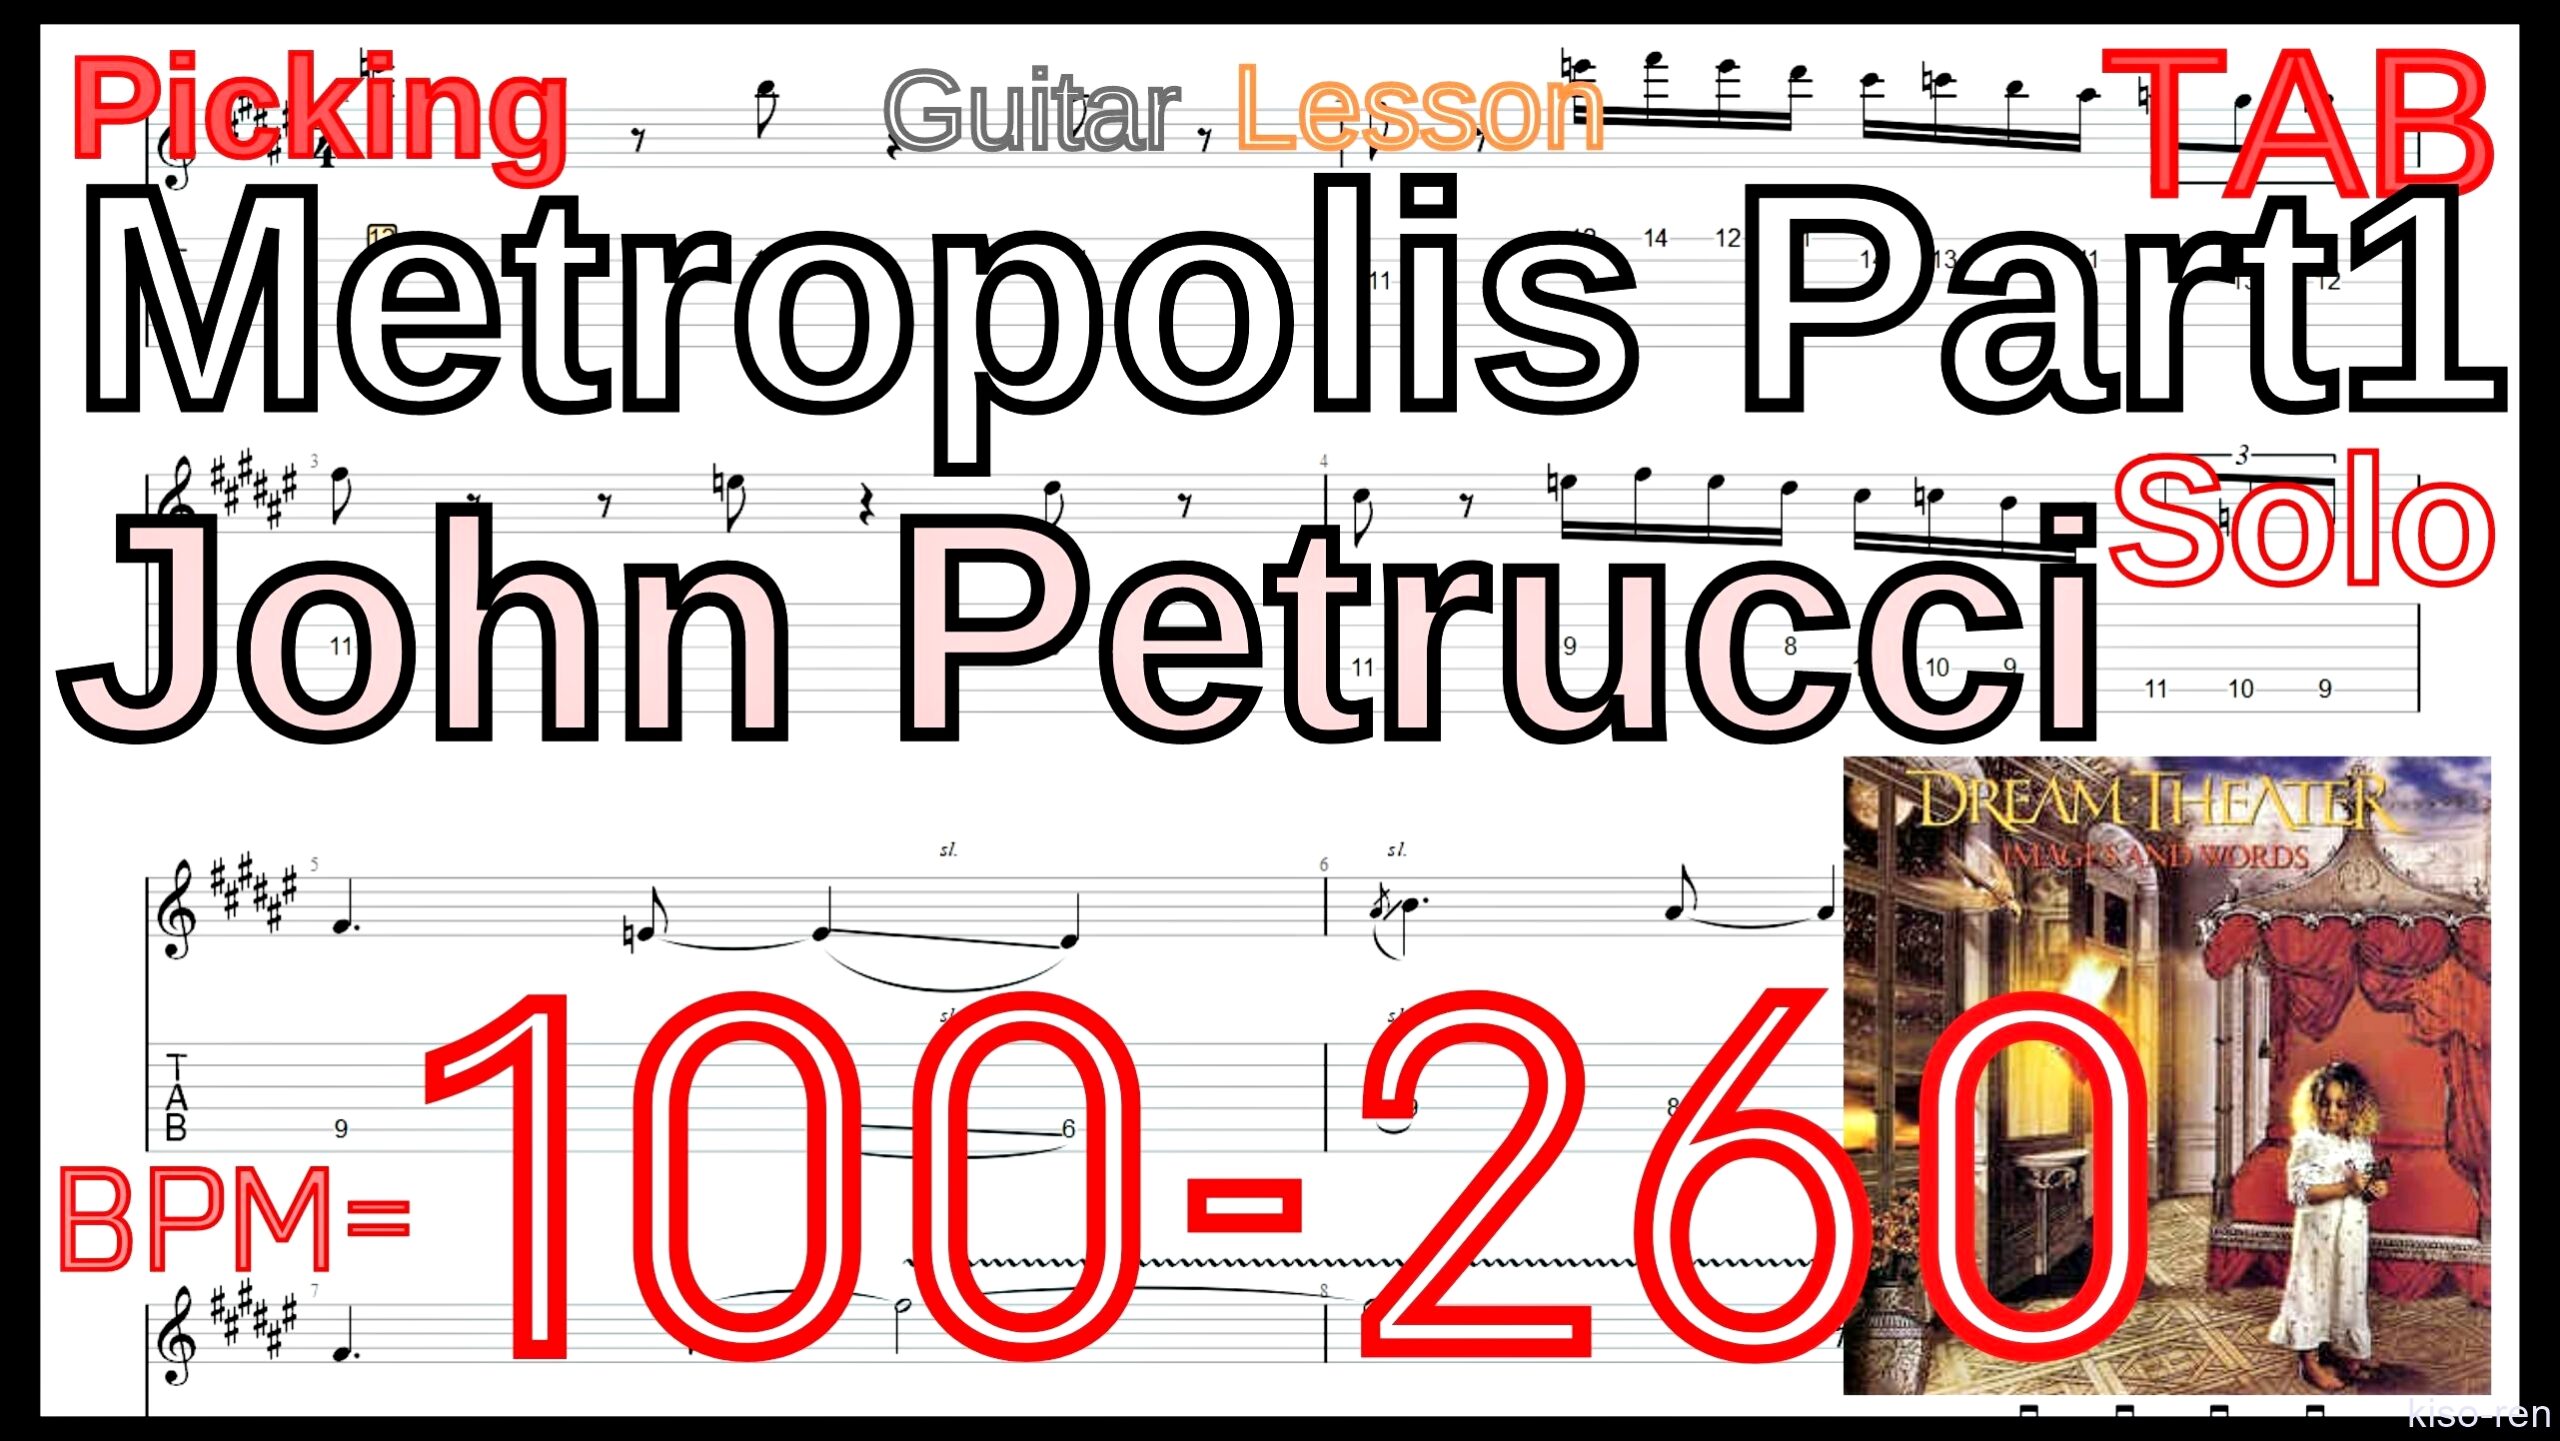 【TAB】Metropolis Part1 / Dream Theater Guitar Solo メトロポリス ドリームシアター ギターソロ 練習 John Petrucci Lesson【Picking】